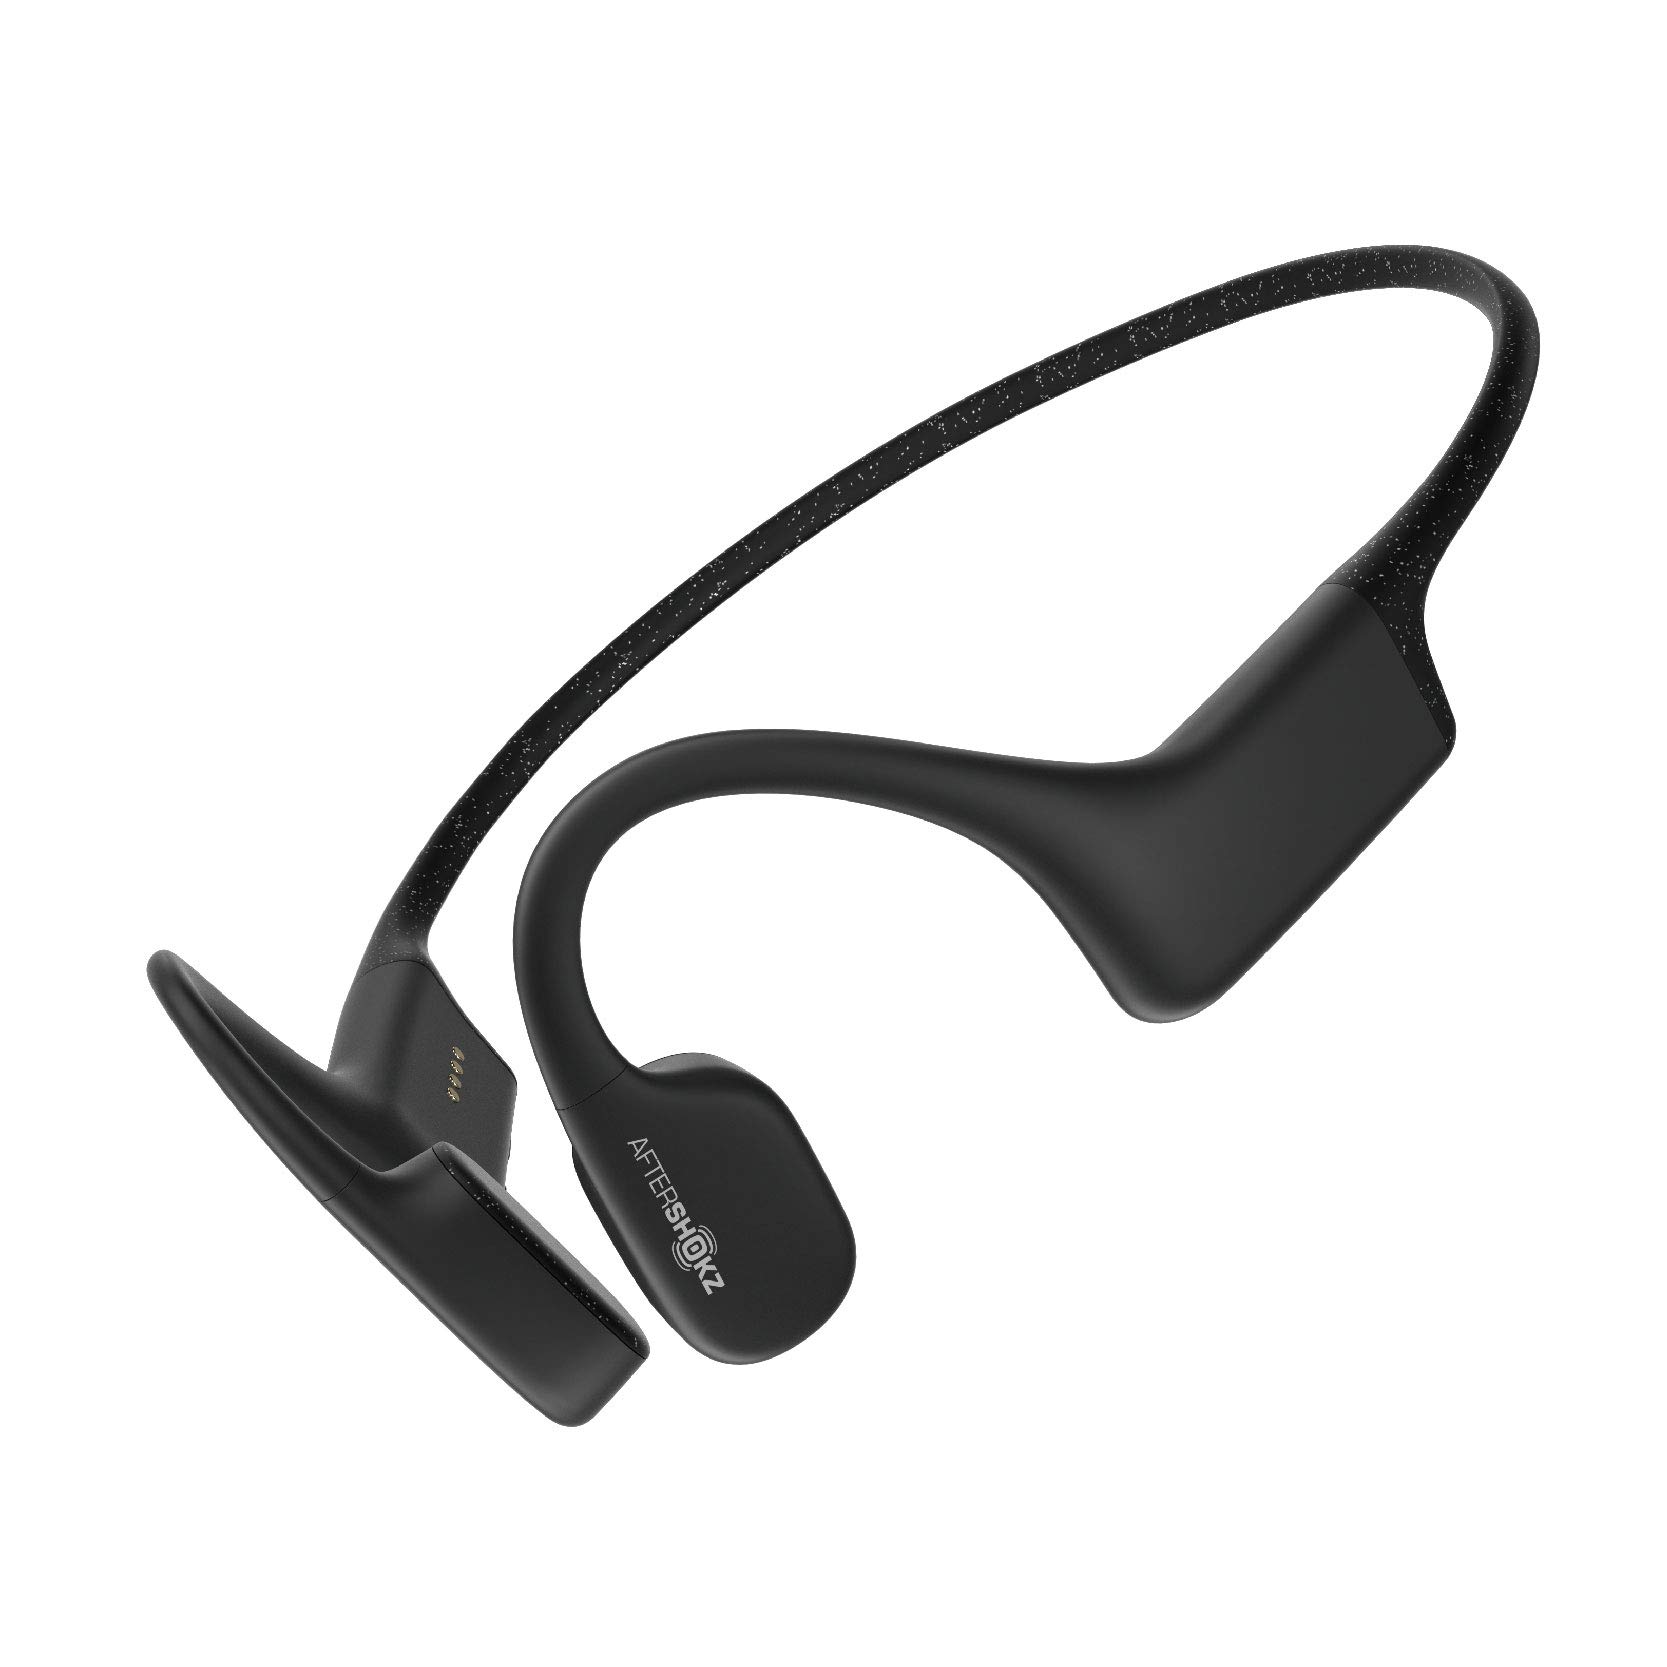 Aftershokz Xtrainerz Bone Conduction MP3 Swimming Headphones, Black Diamond